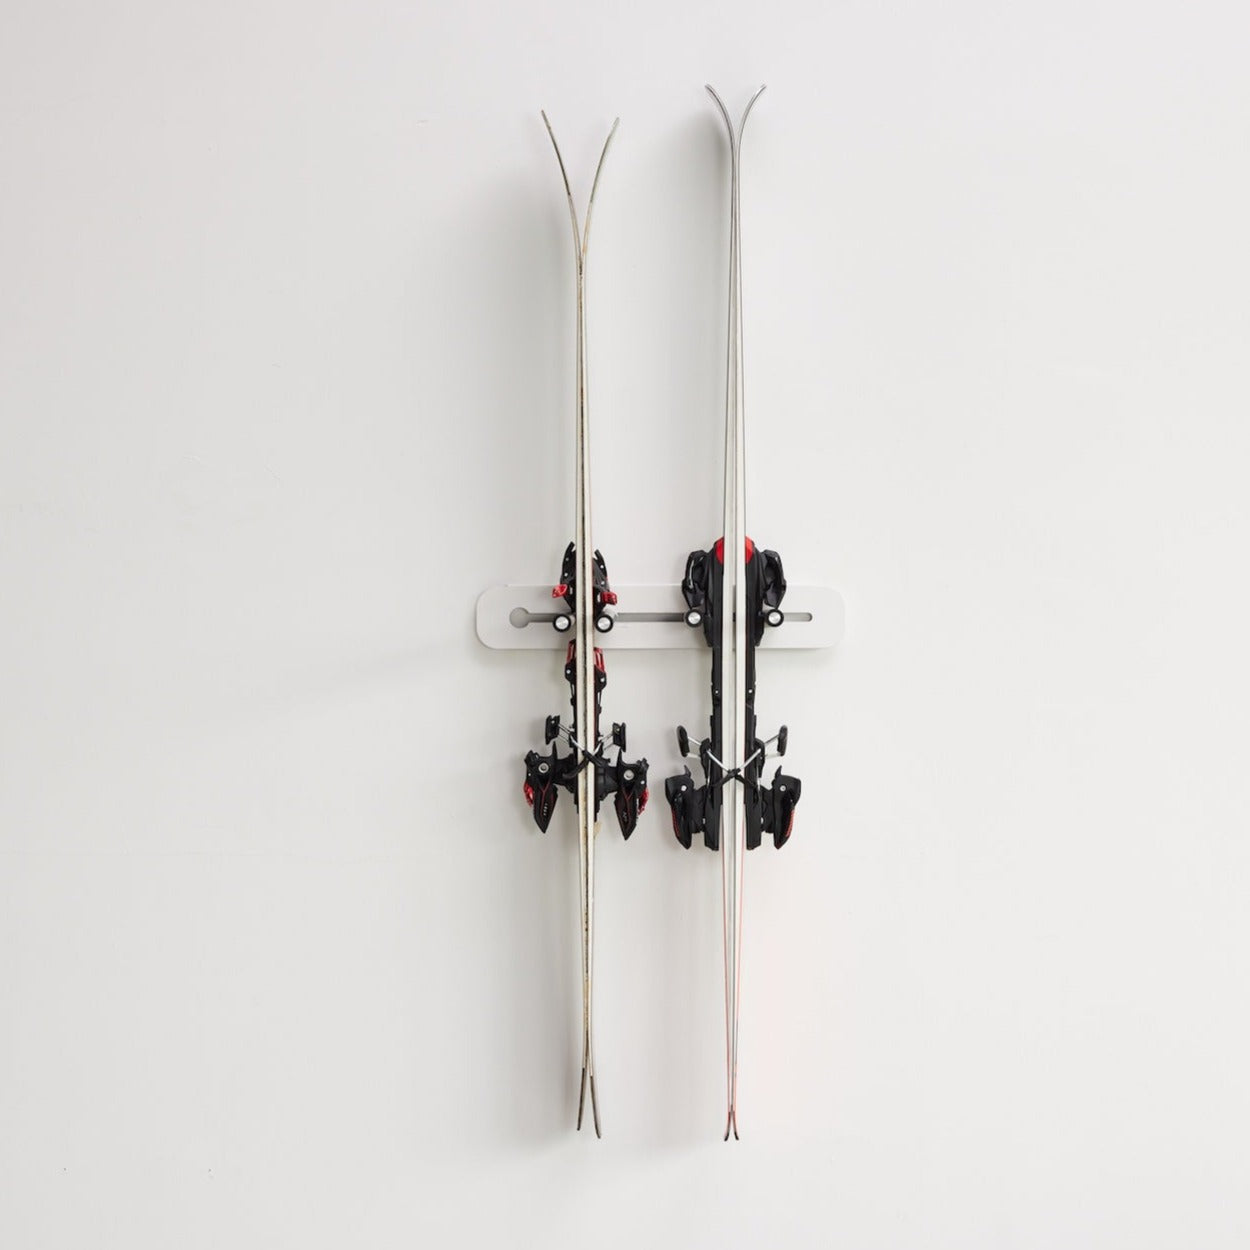 Ski wall mount storage